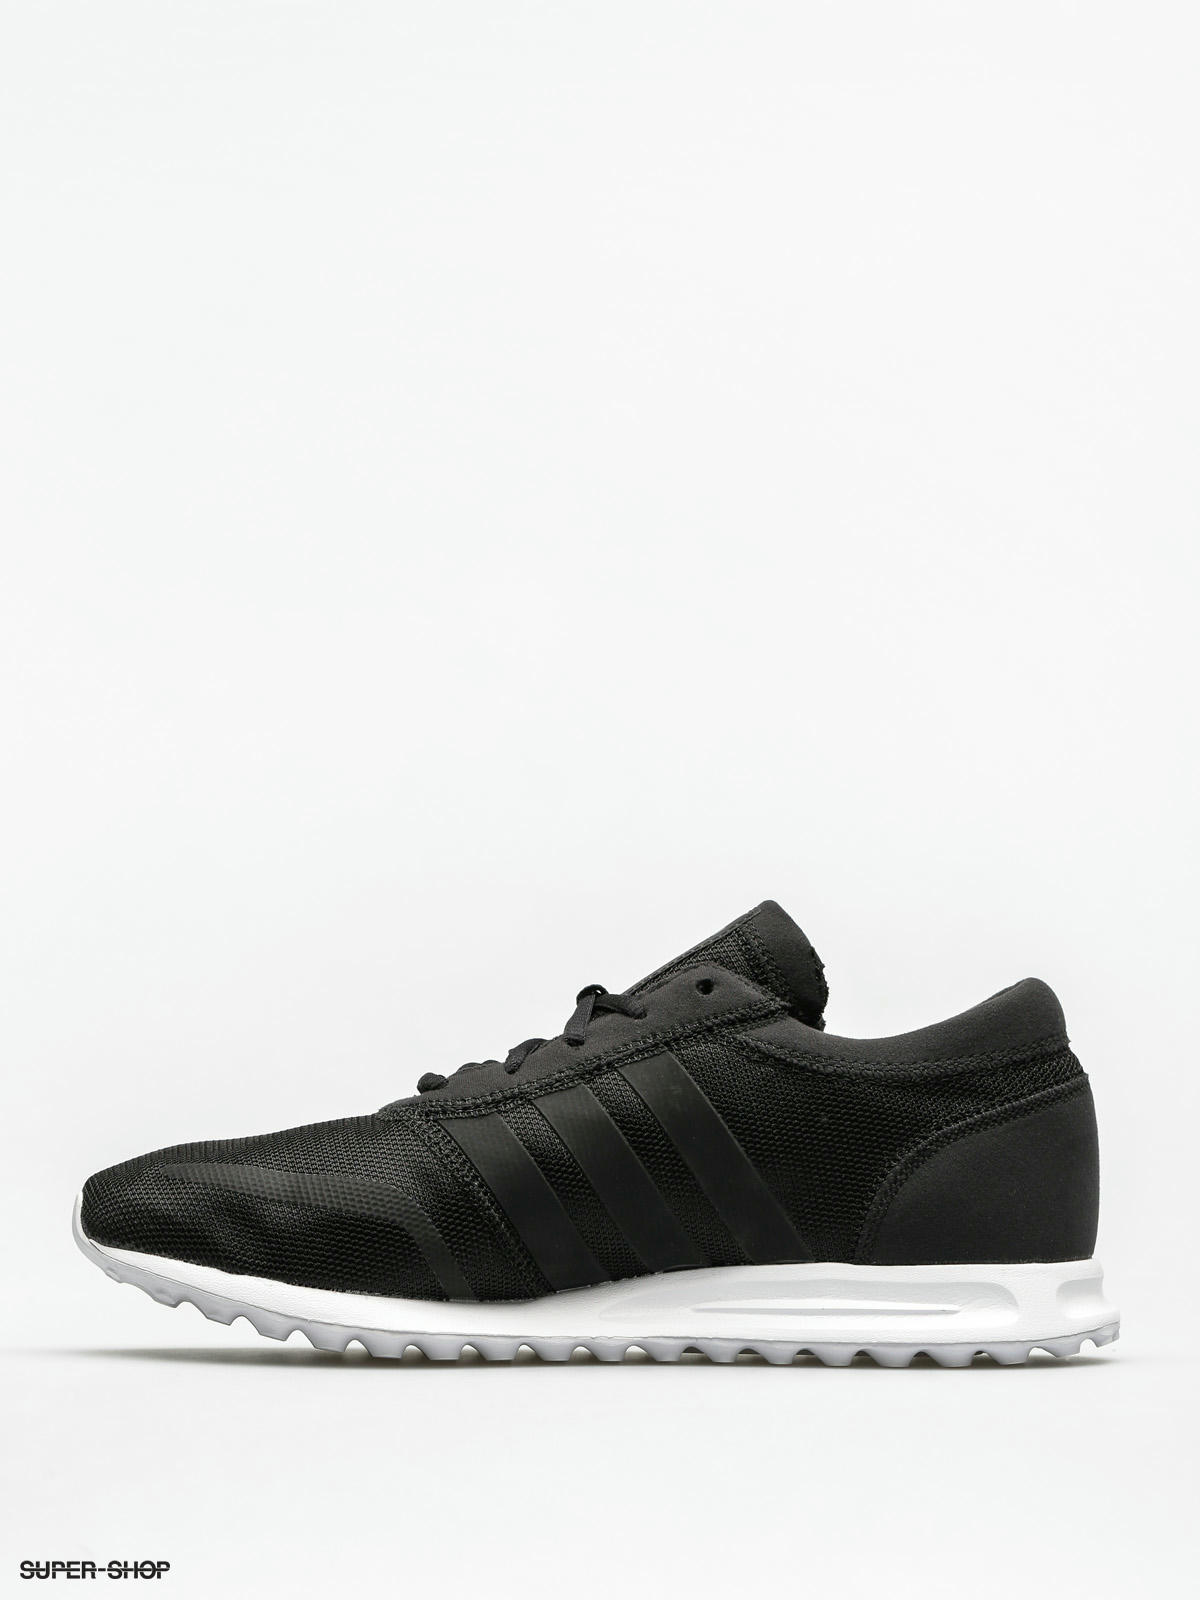 adidas Shoes Los Angeles black/core black/ftwr white)